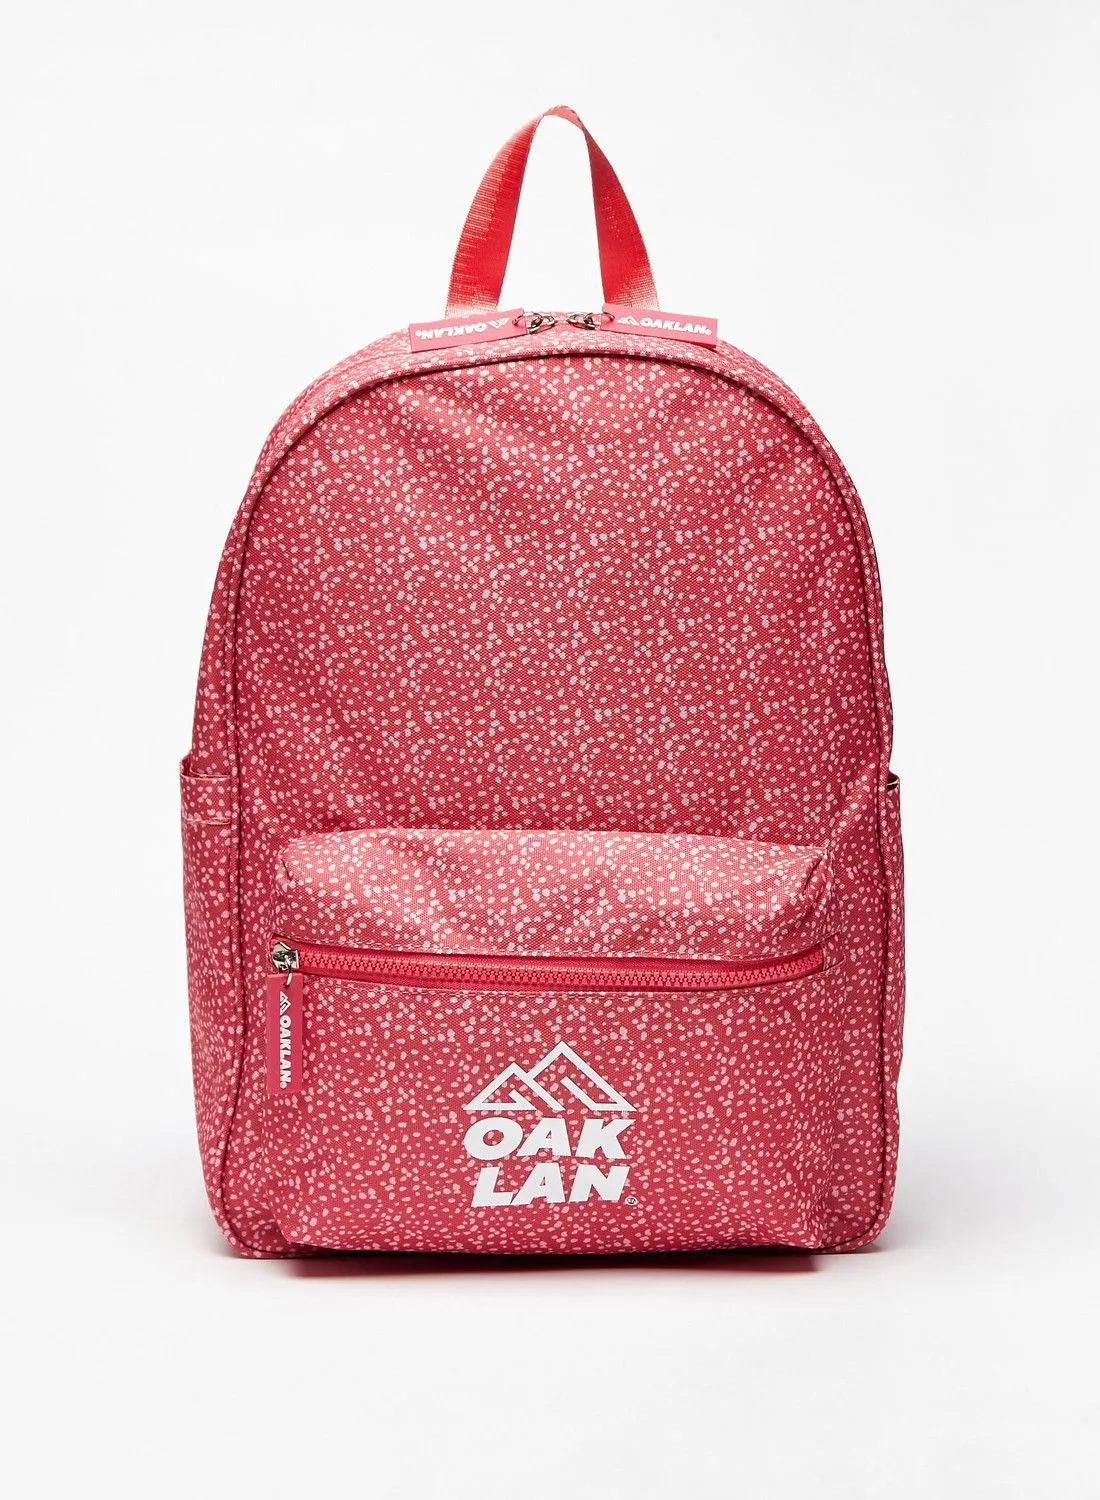 OAKLAN Printed Backpack with Zip Closure